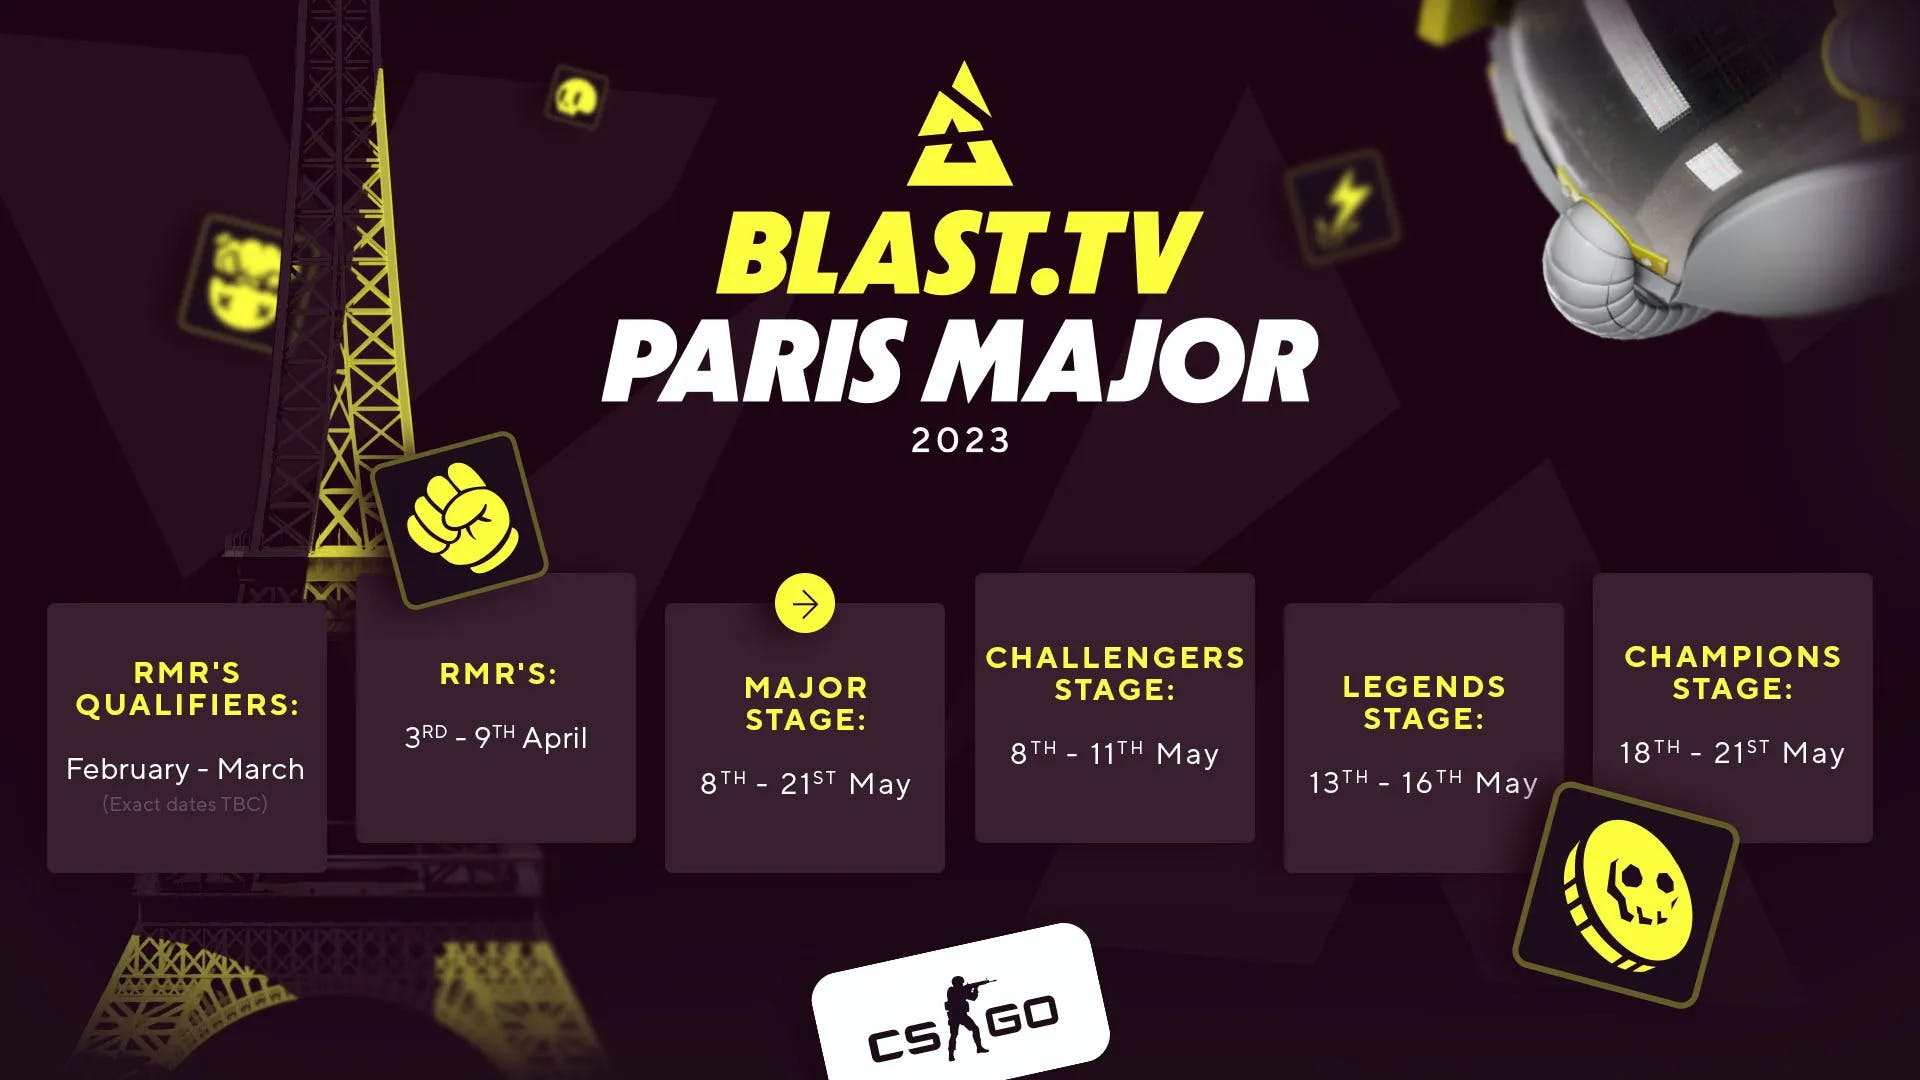 BLAST.tv Paris Major 2023: Format